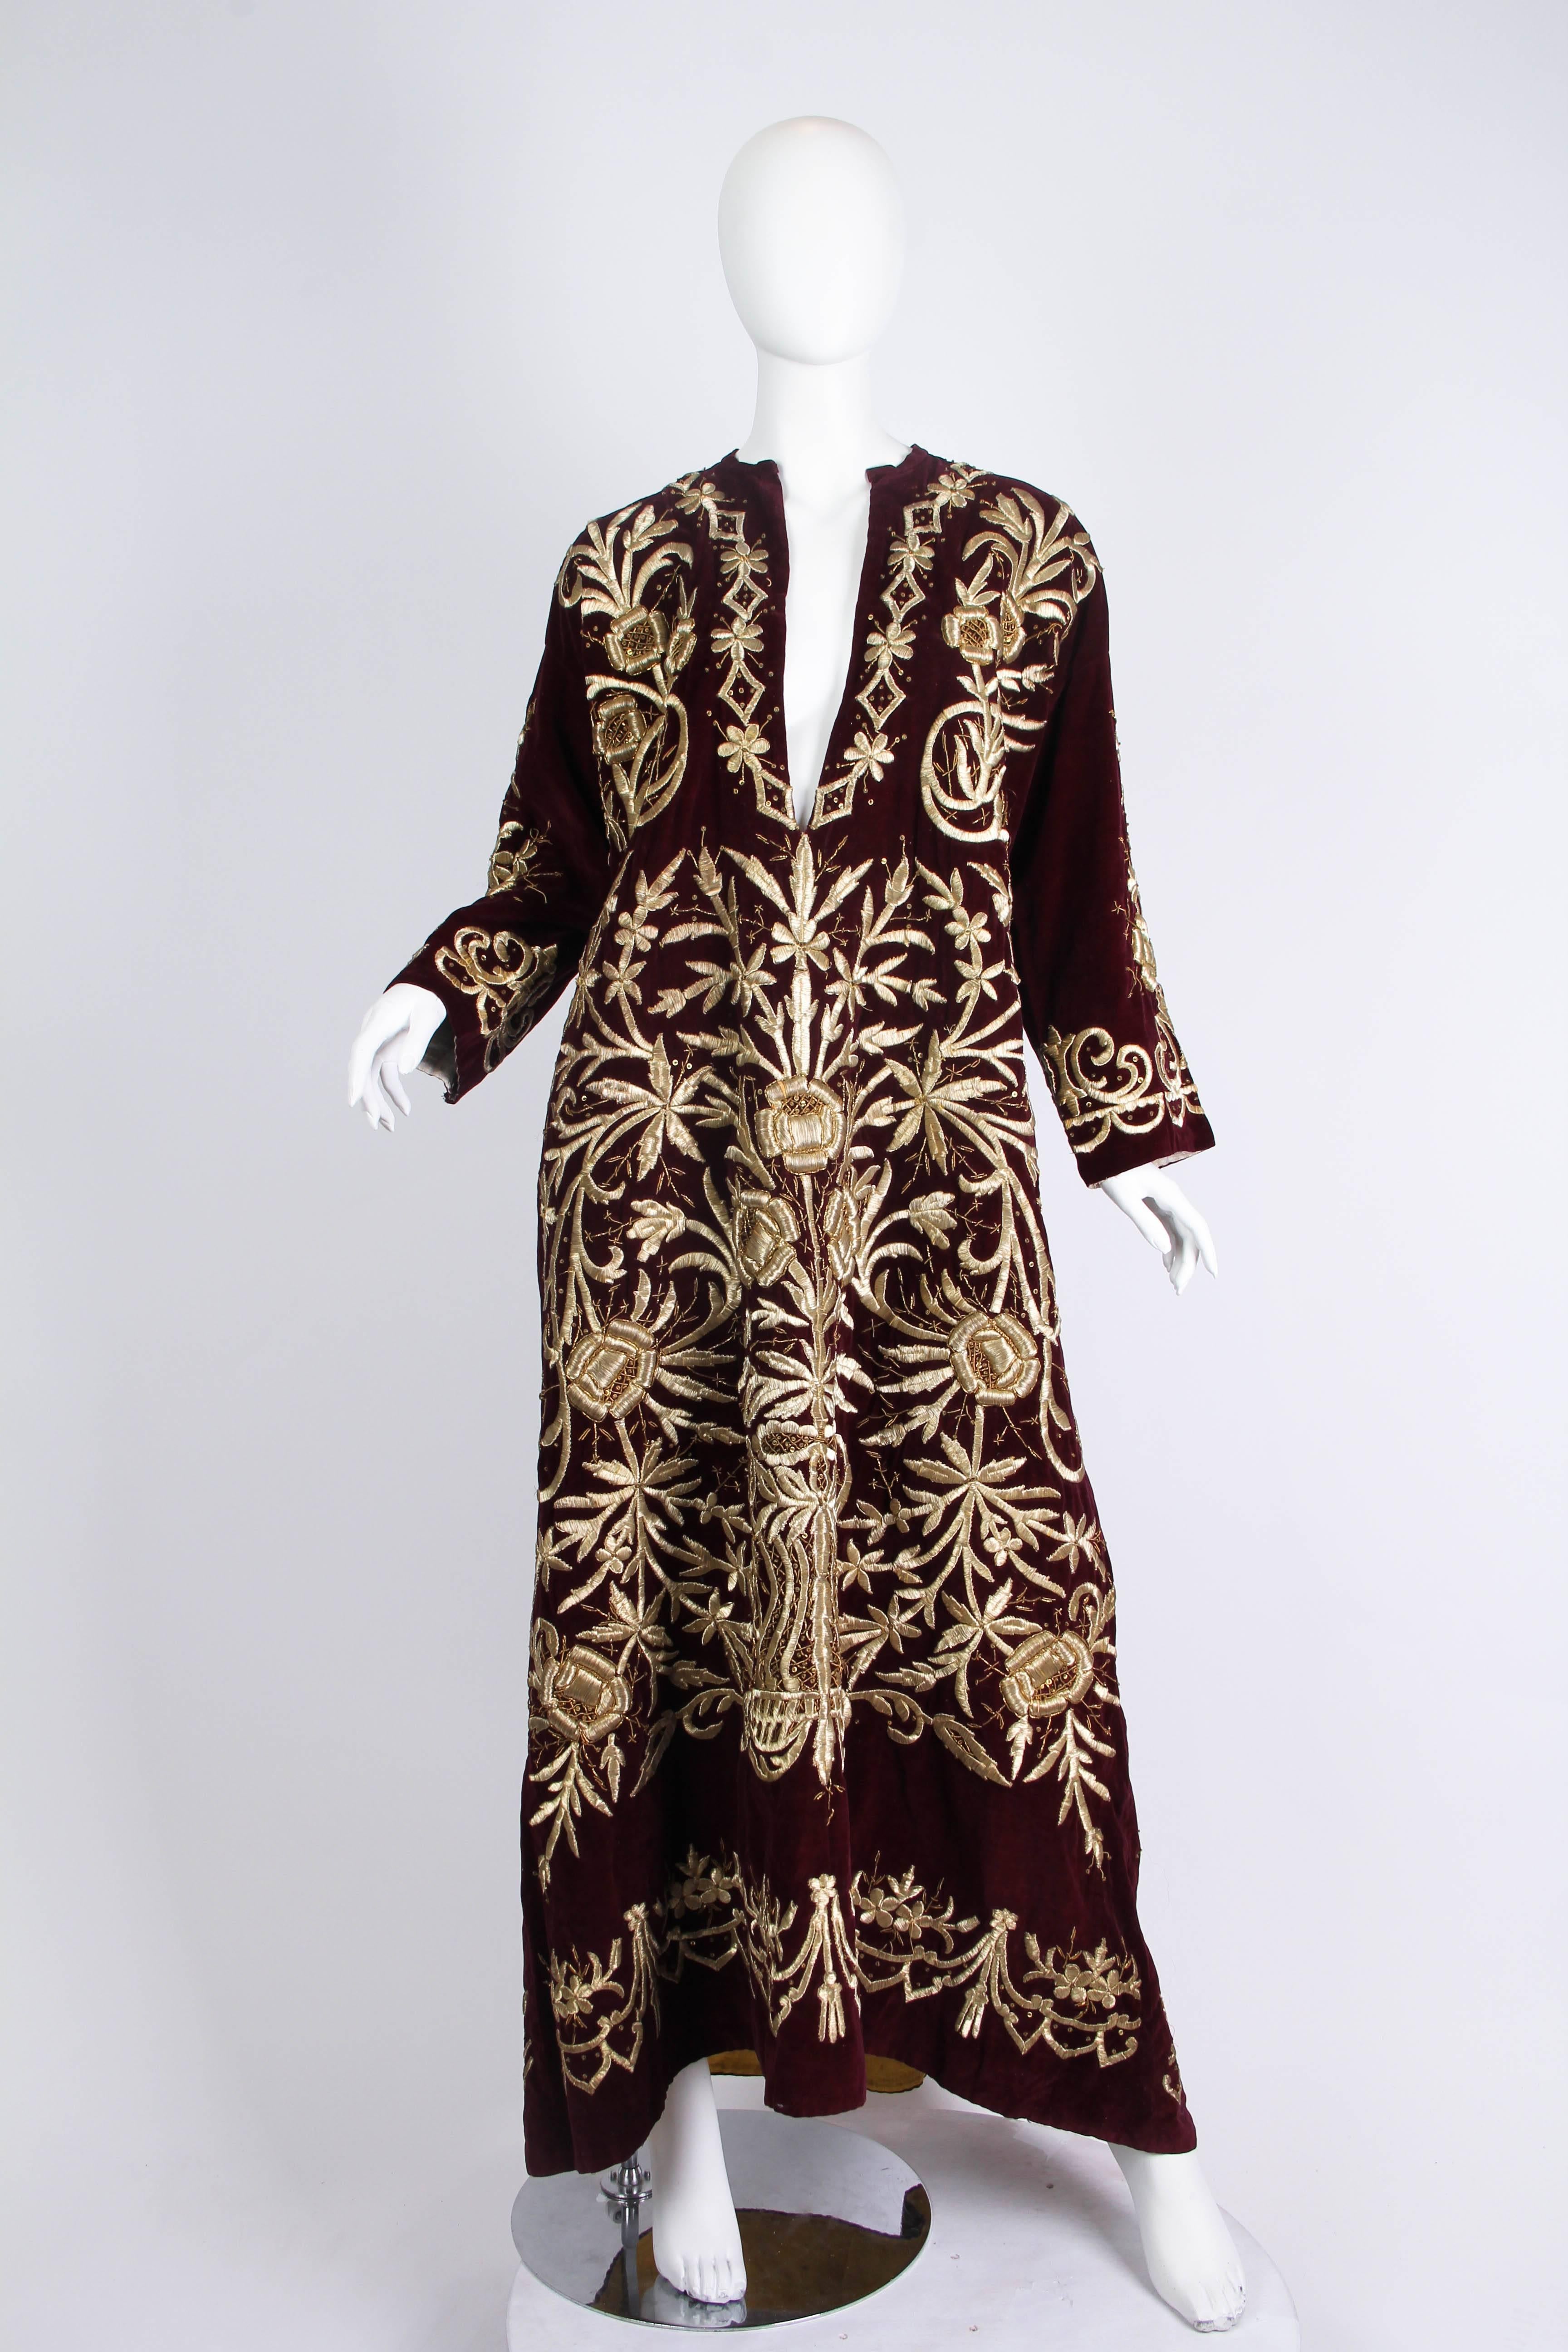 Black Antique Ottoman Gold Embroidered Velvet Dress From Turkey